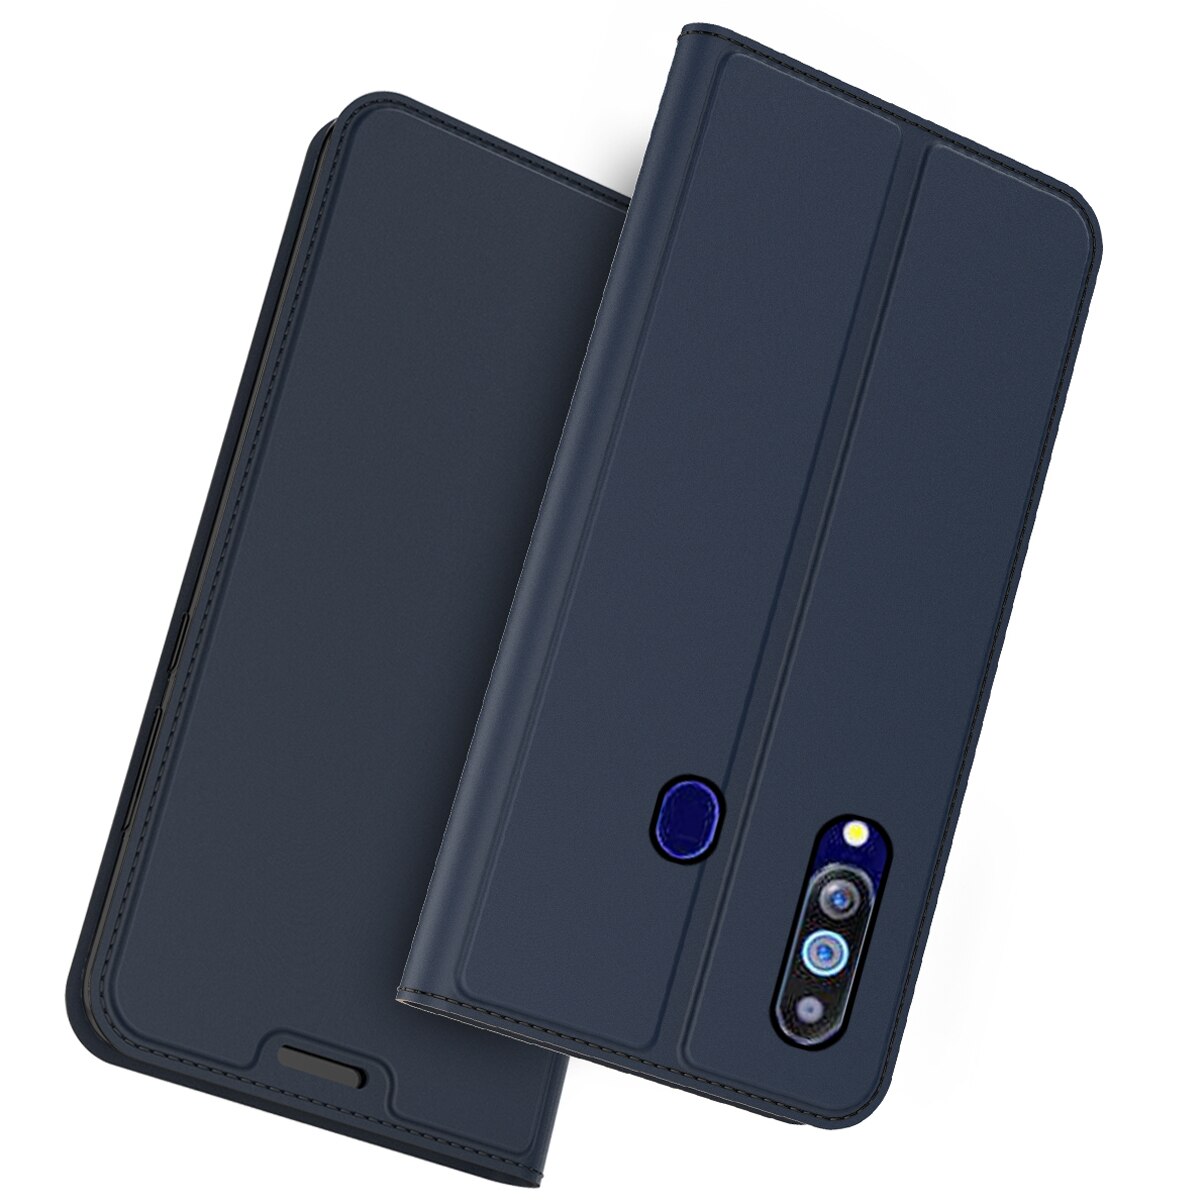 Voor Umidigi A5 Pro Case Leer Ultra Dunne Flip Stand Beschermende Wallet Cover Voor Umidigi A5 Pro Case kaarthouder